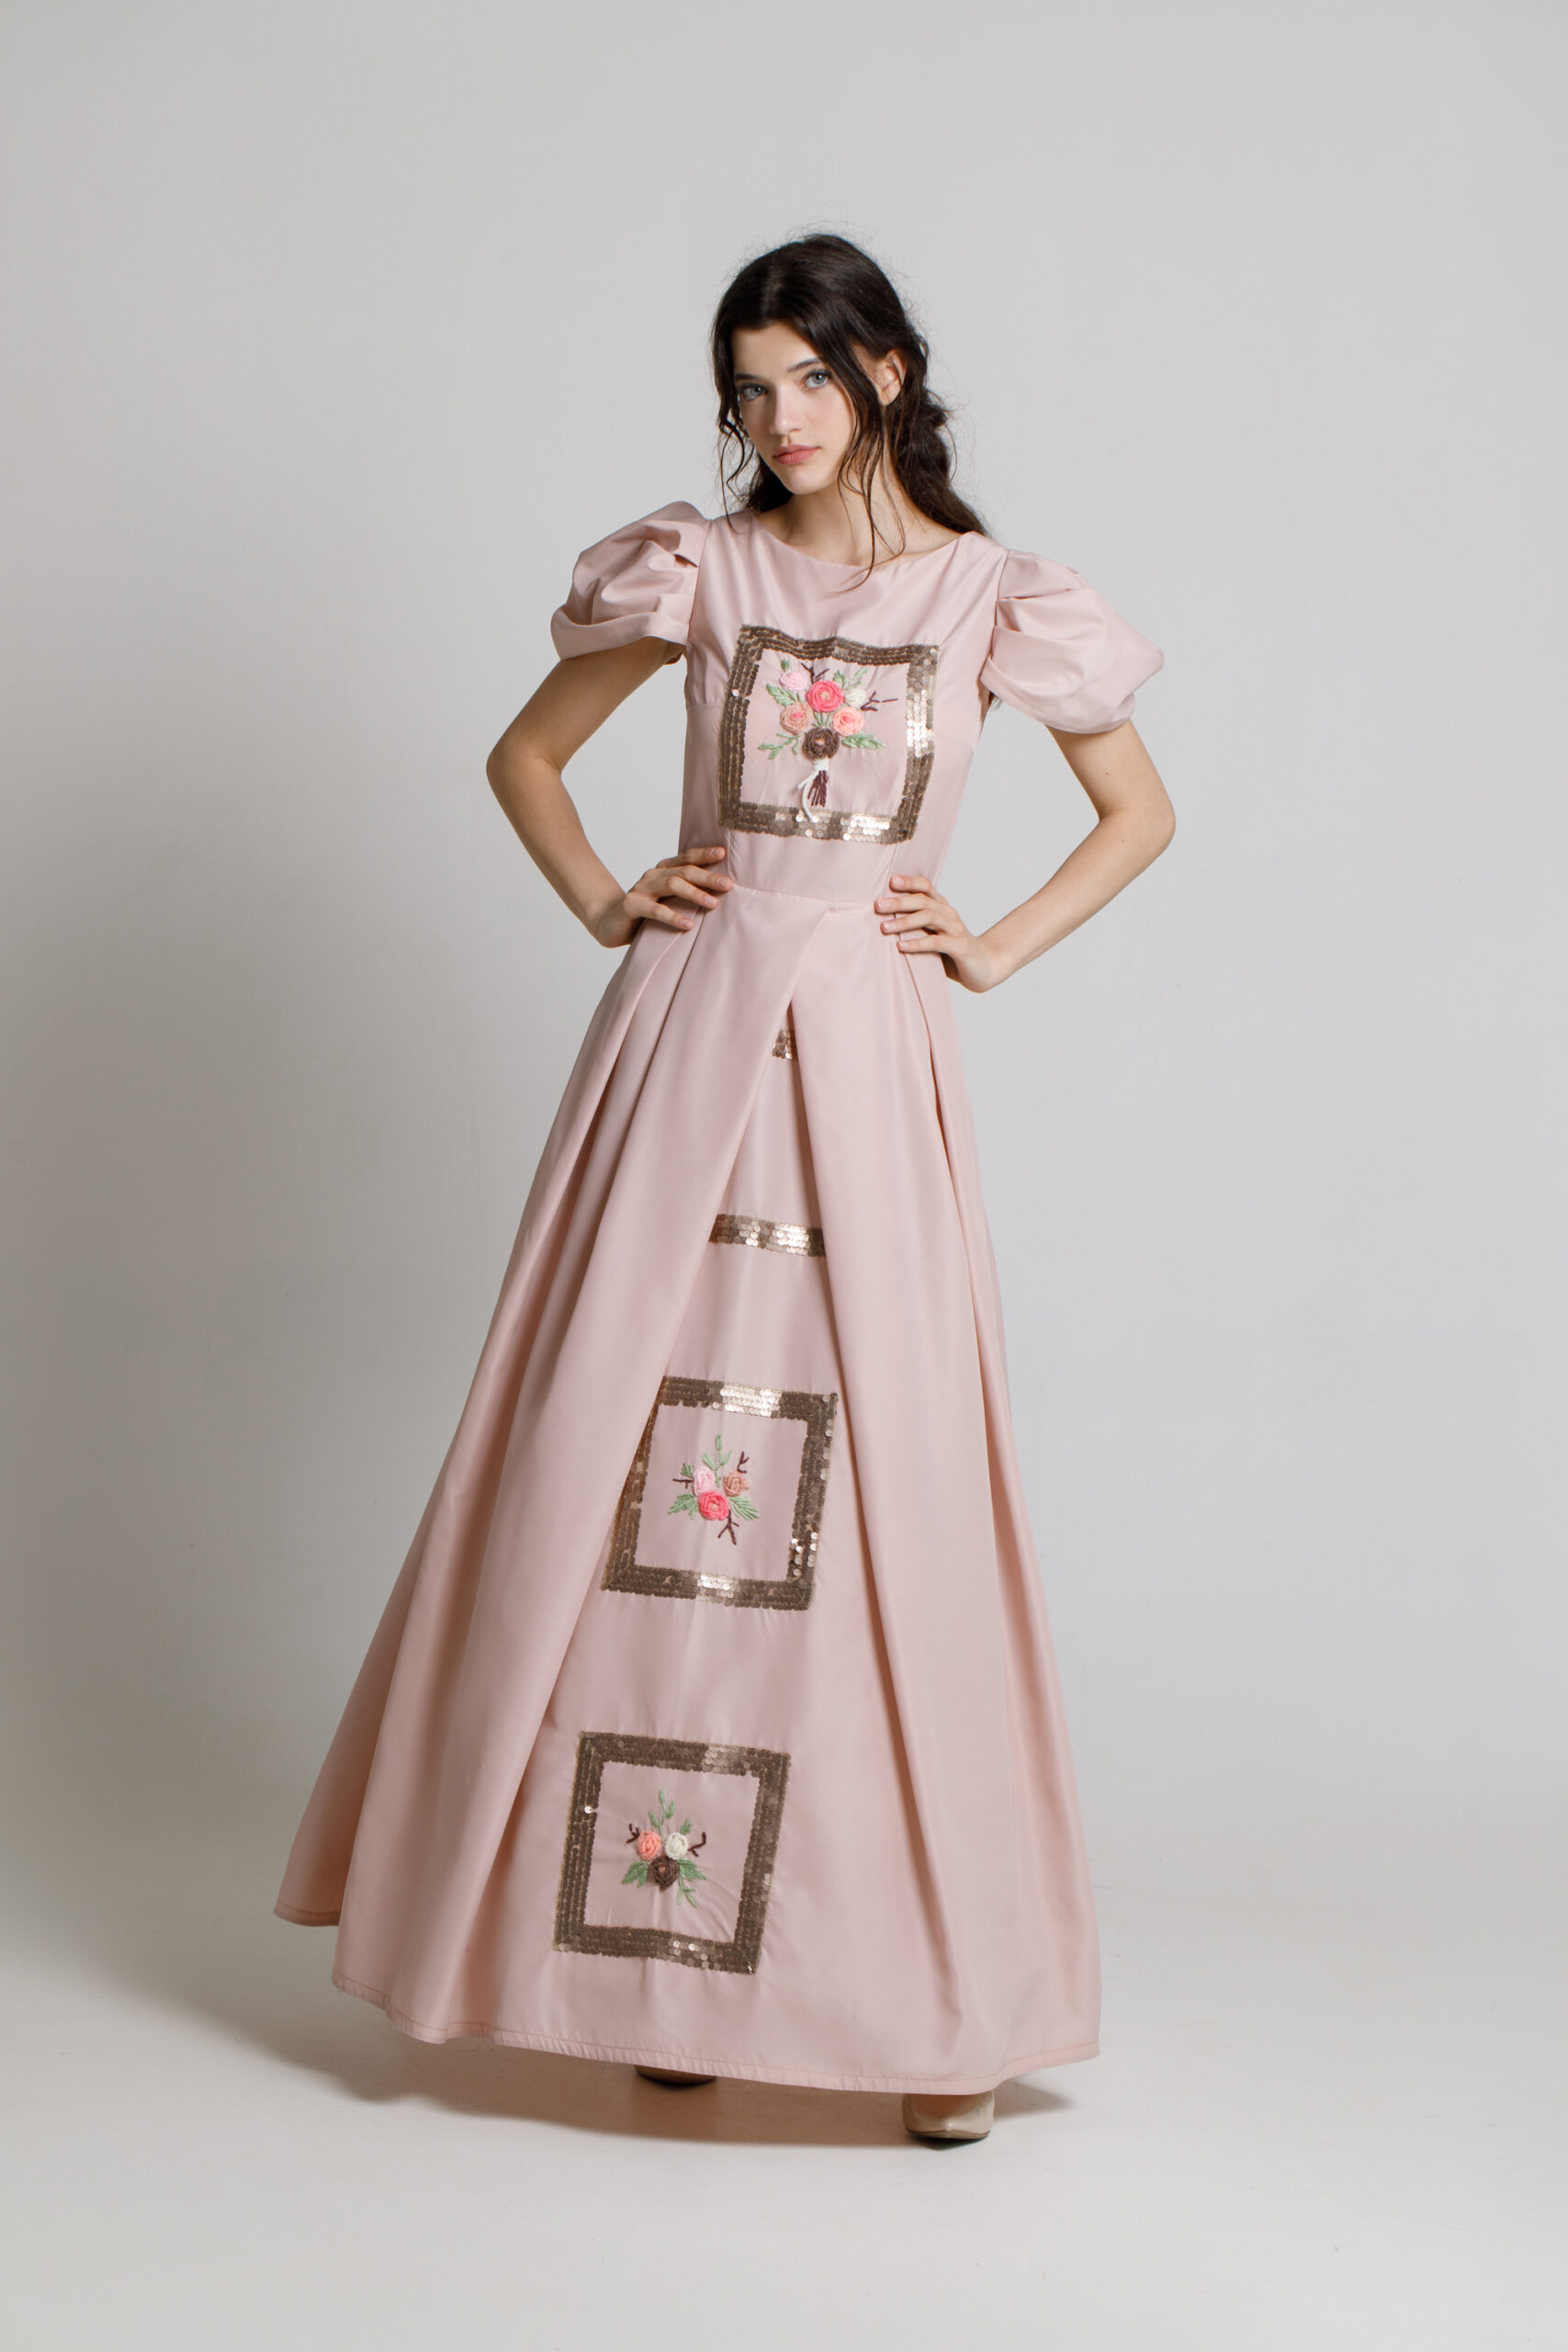 CHLOE elegant powder pink taffeta dress with crinoline. Natural fabrics, original design, handmade embroidery